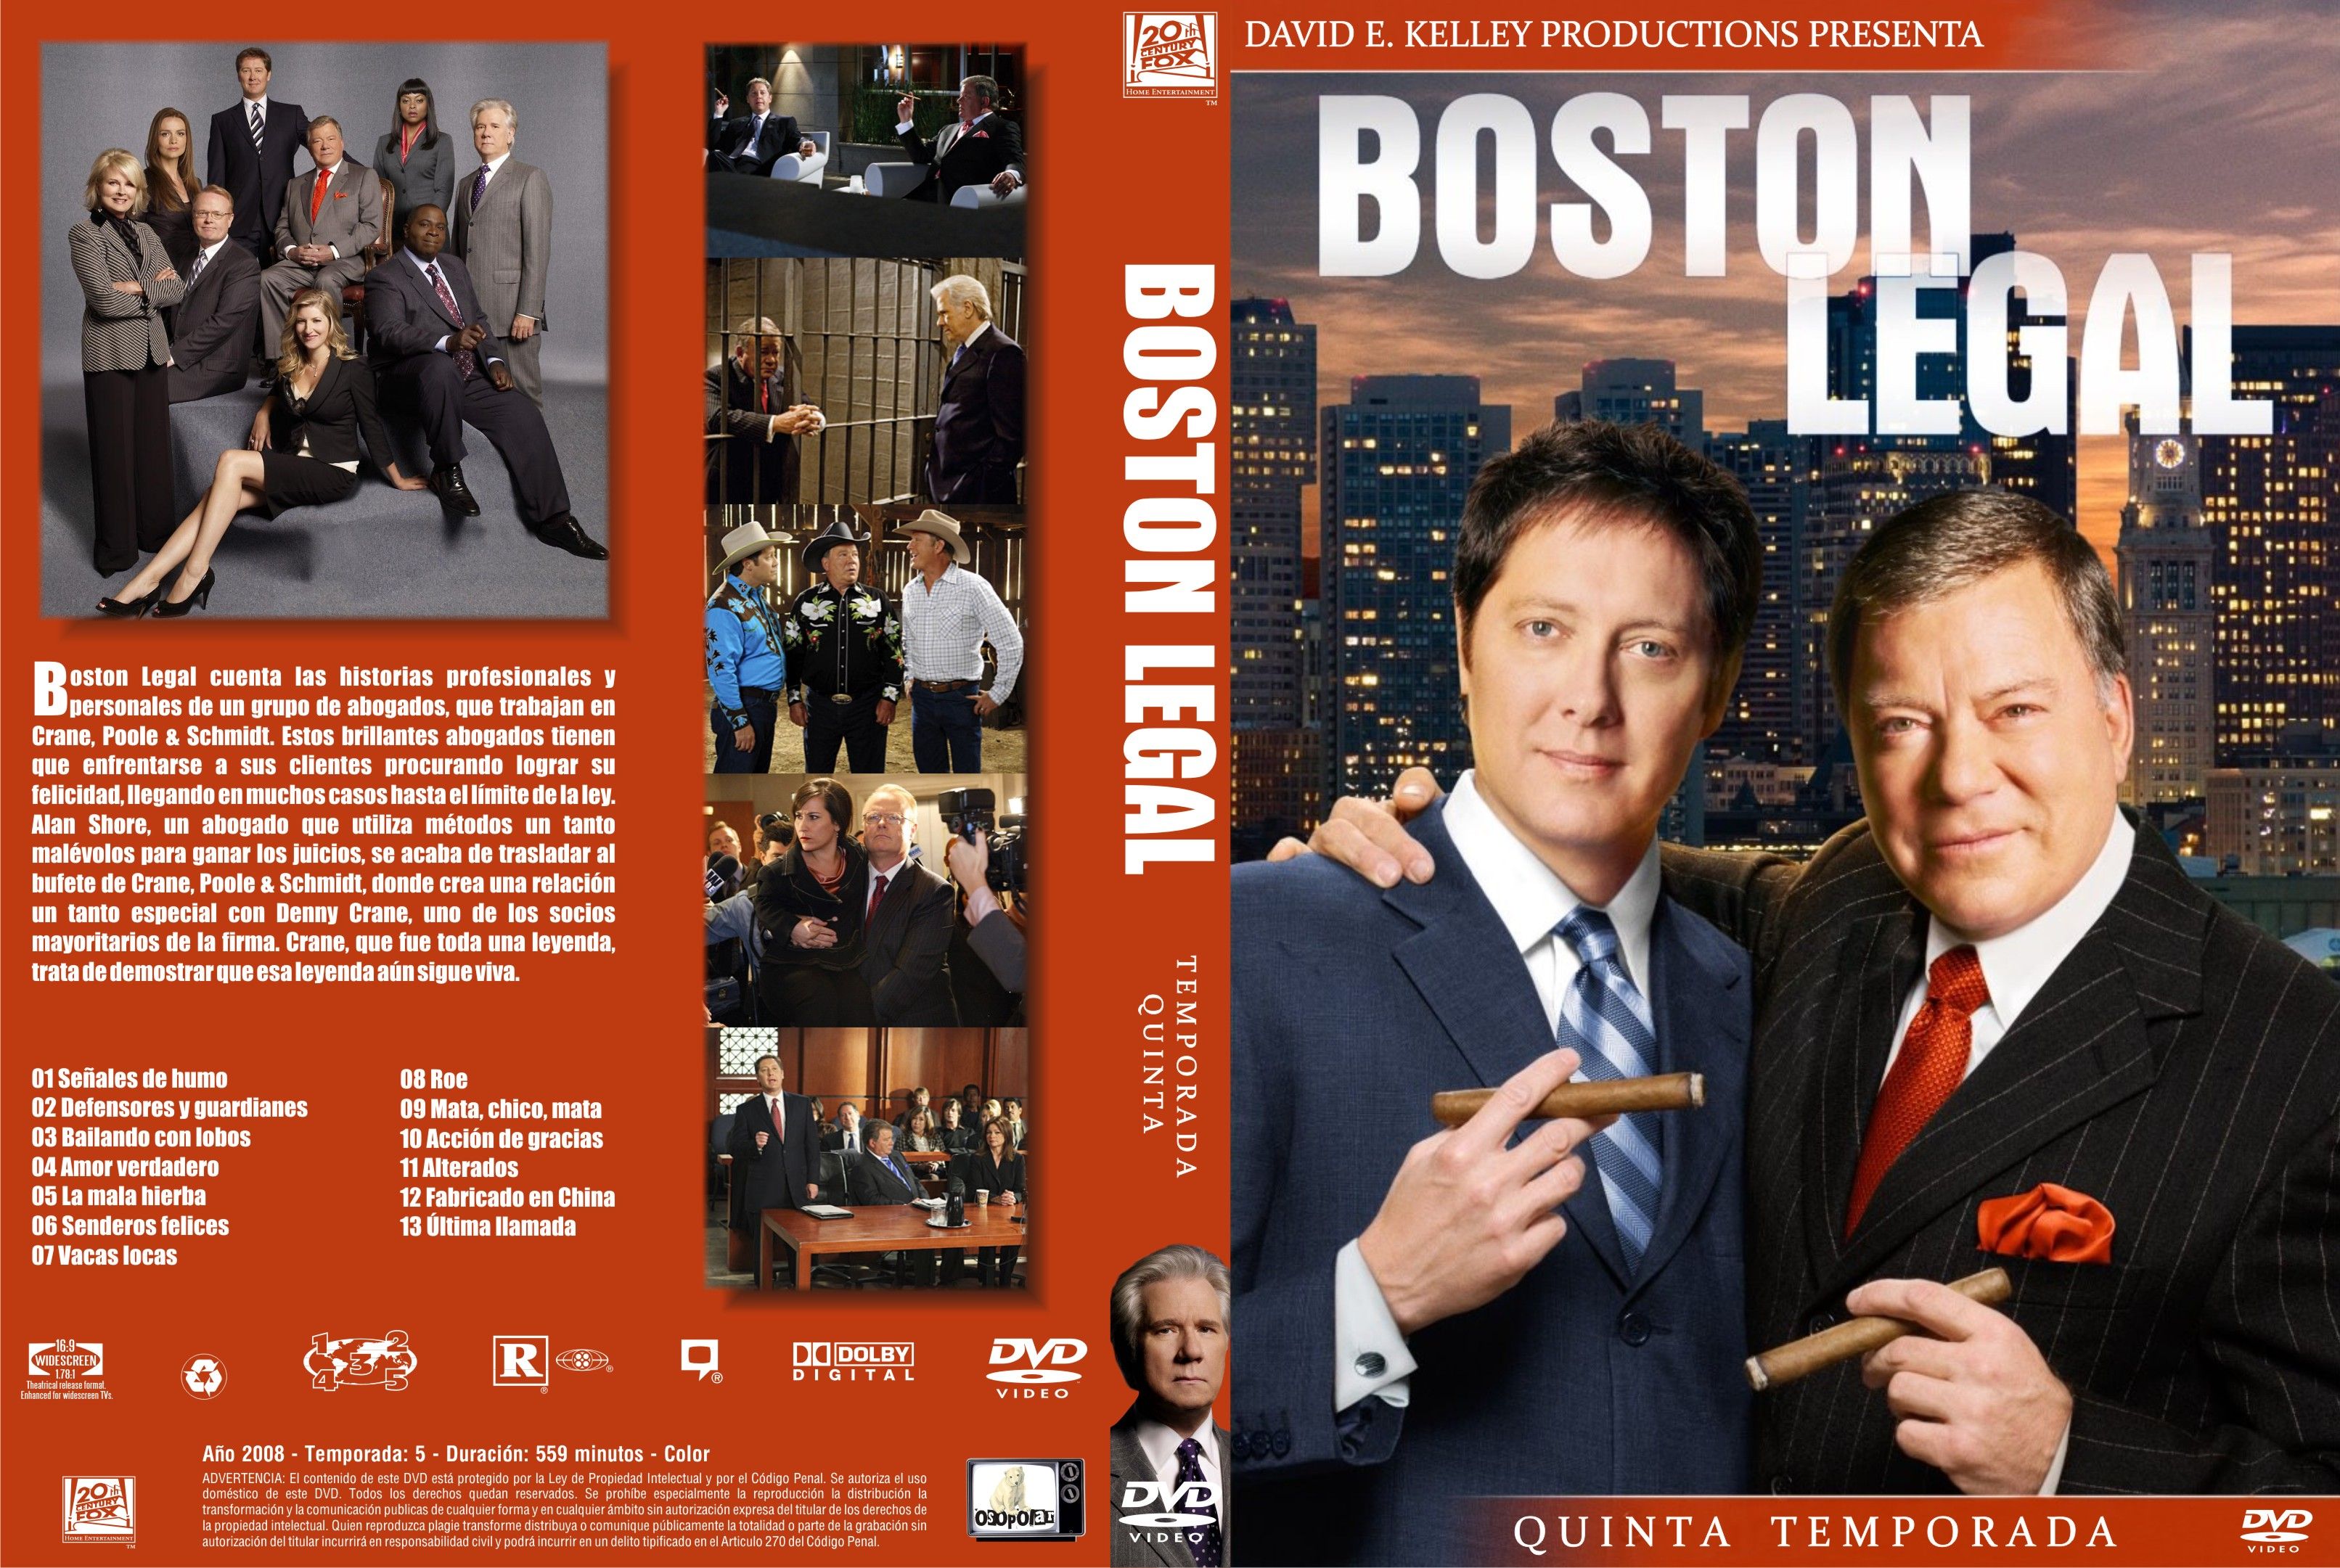 Boston Legal all seasons imdb-dl5 - cd.